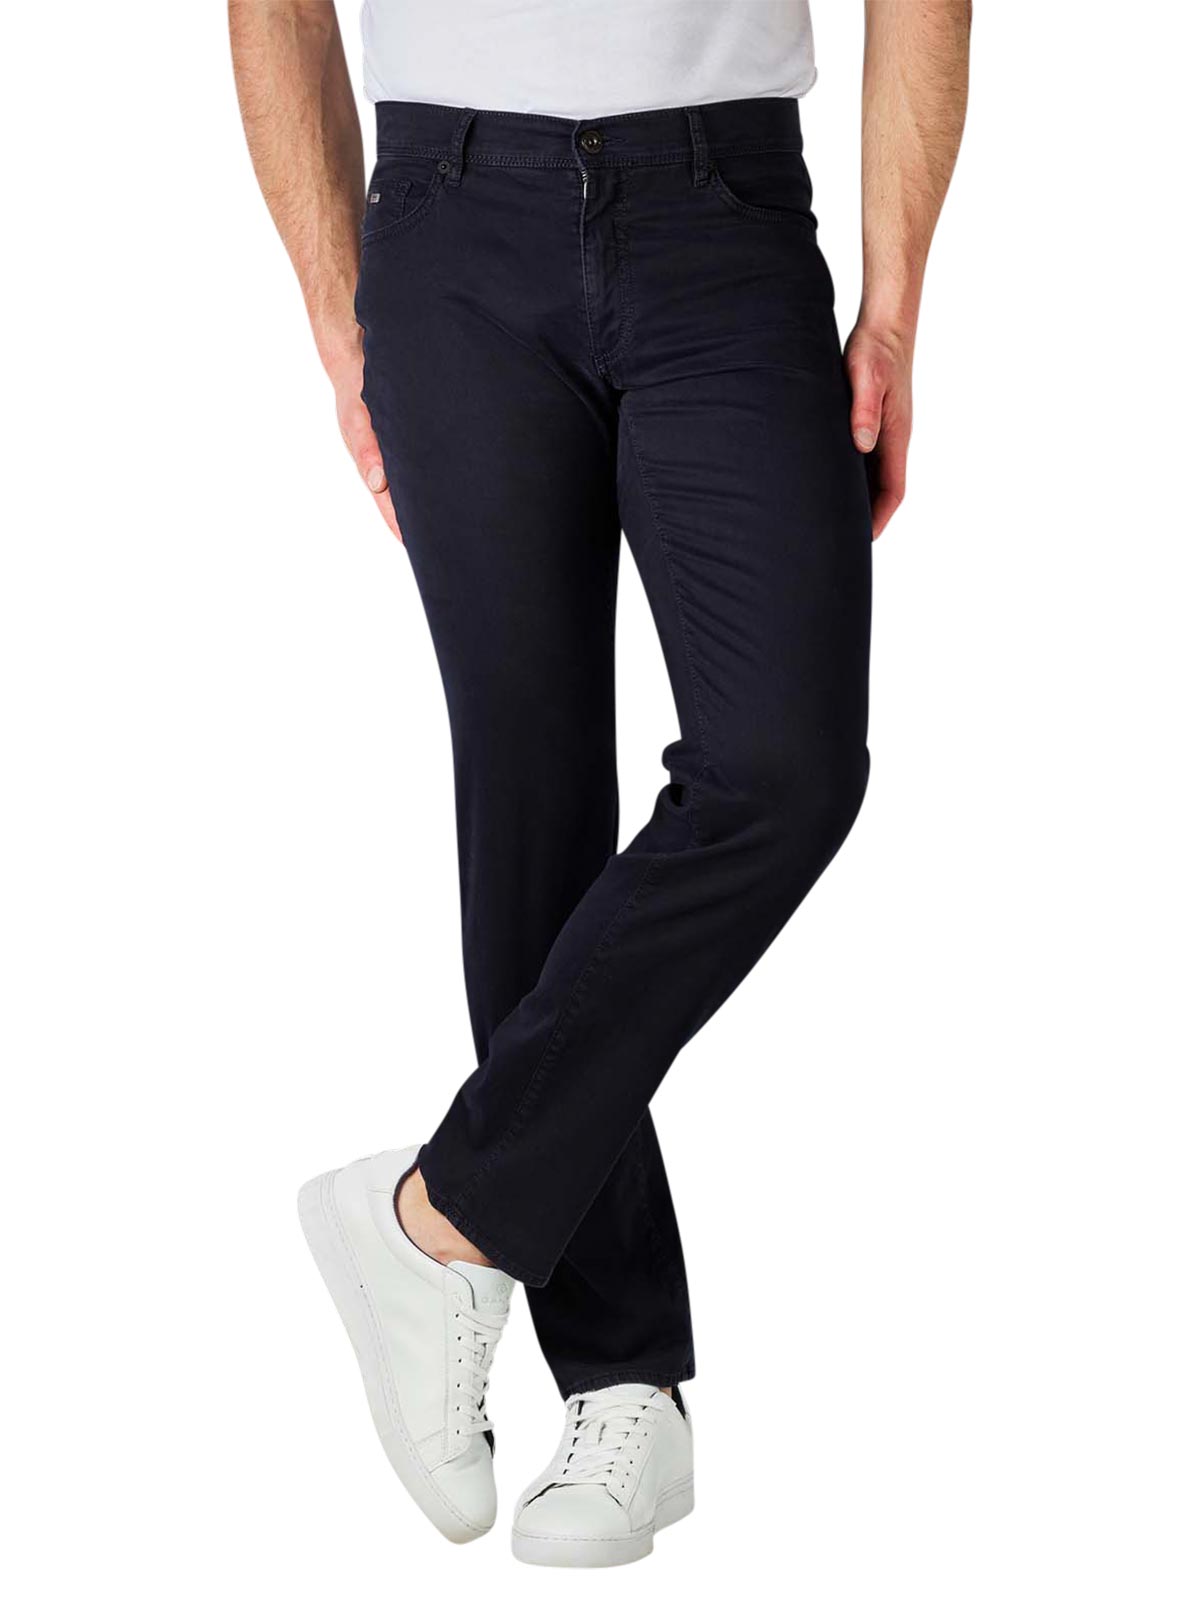 Op risico De daadwerkelijke Heel boos Brax Cadiz (Cooper New) Jeans Straight perma blue Brax Men's Jeans | Free  Shipping on BEBASIC.CH - SIMPLY LOOK GOOD